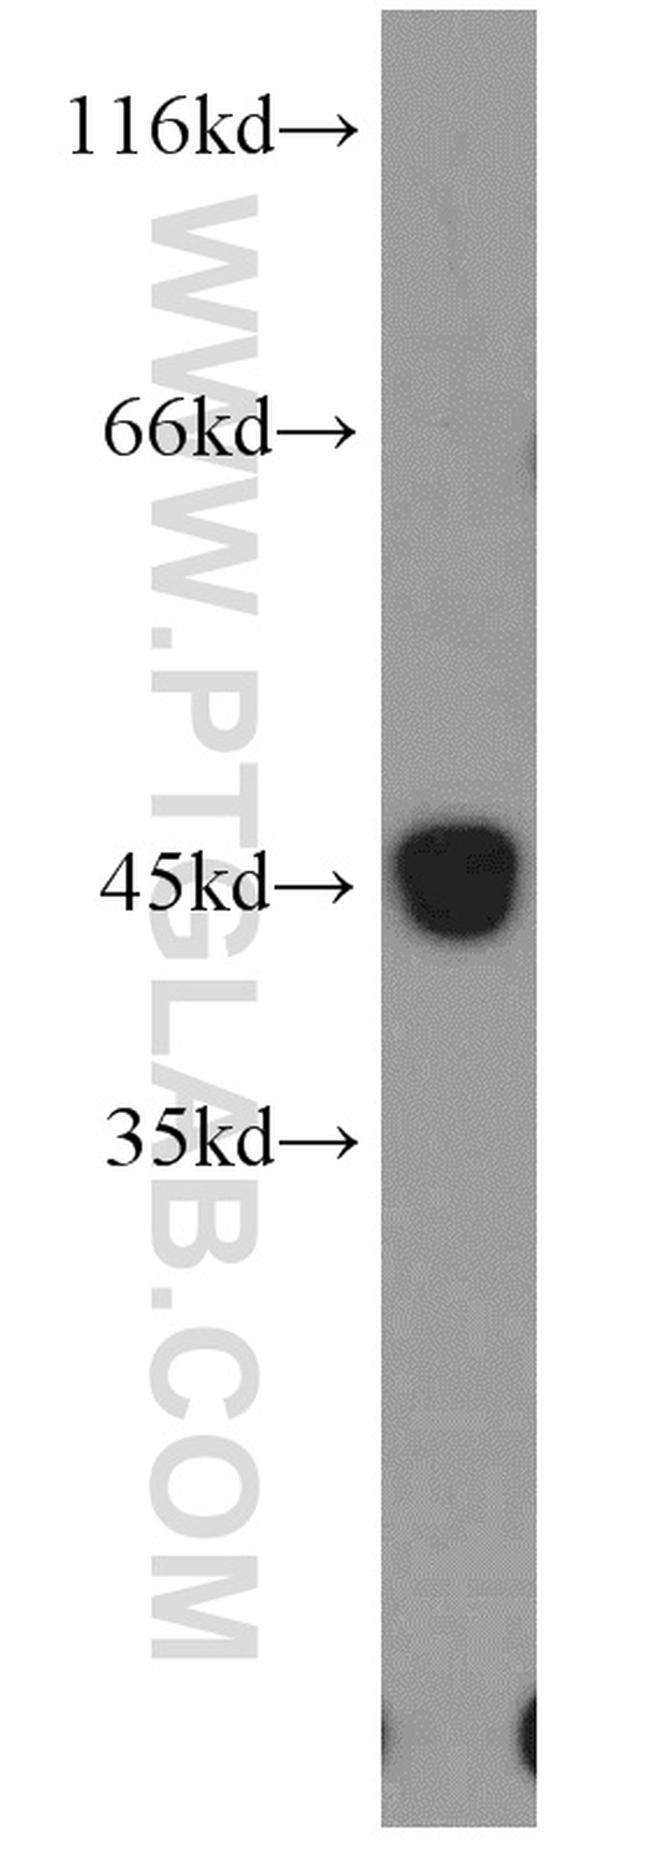 CCR5 Antibody in Western Blot (WB)